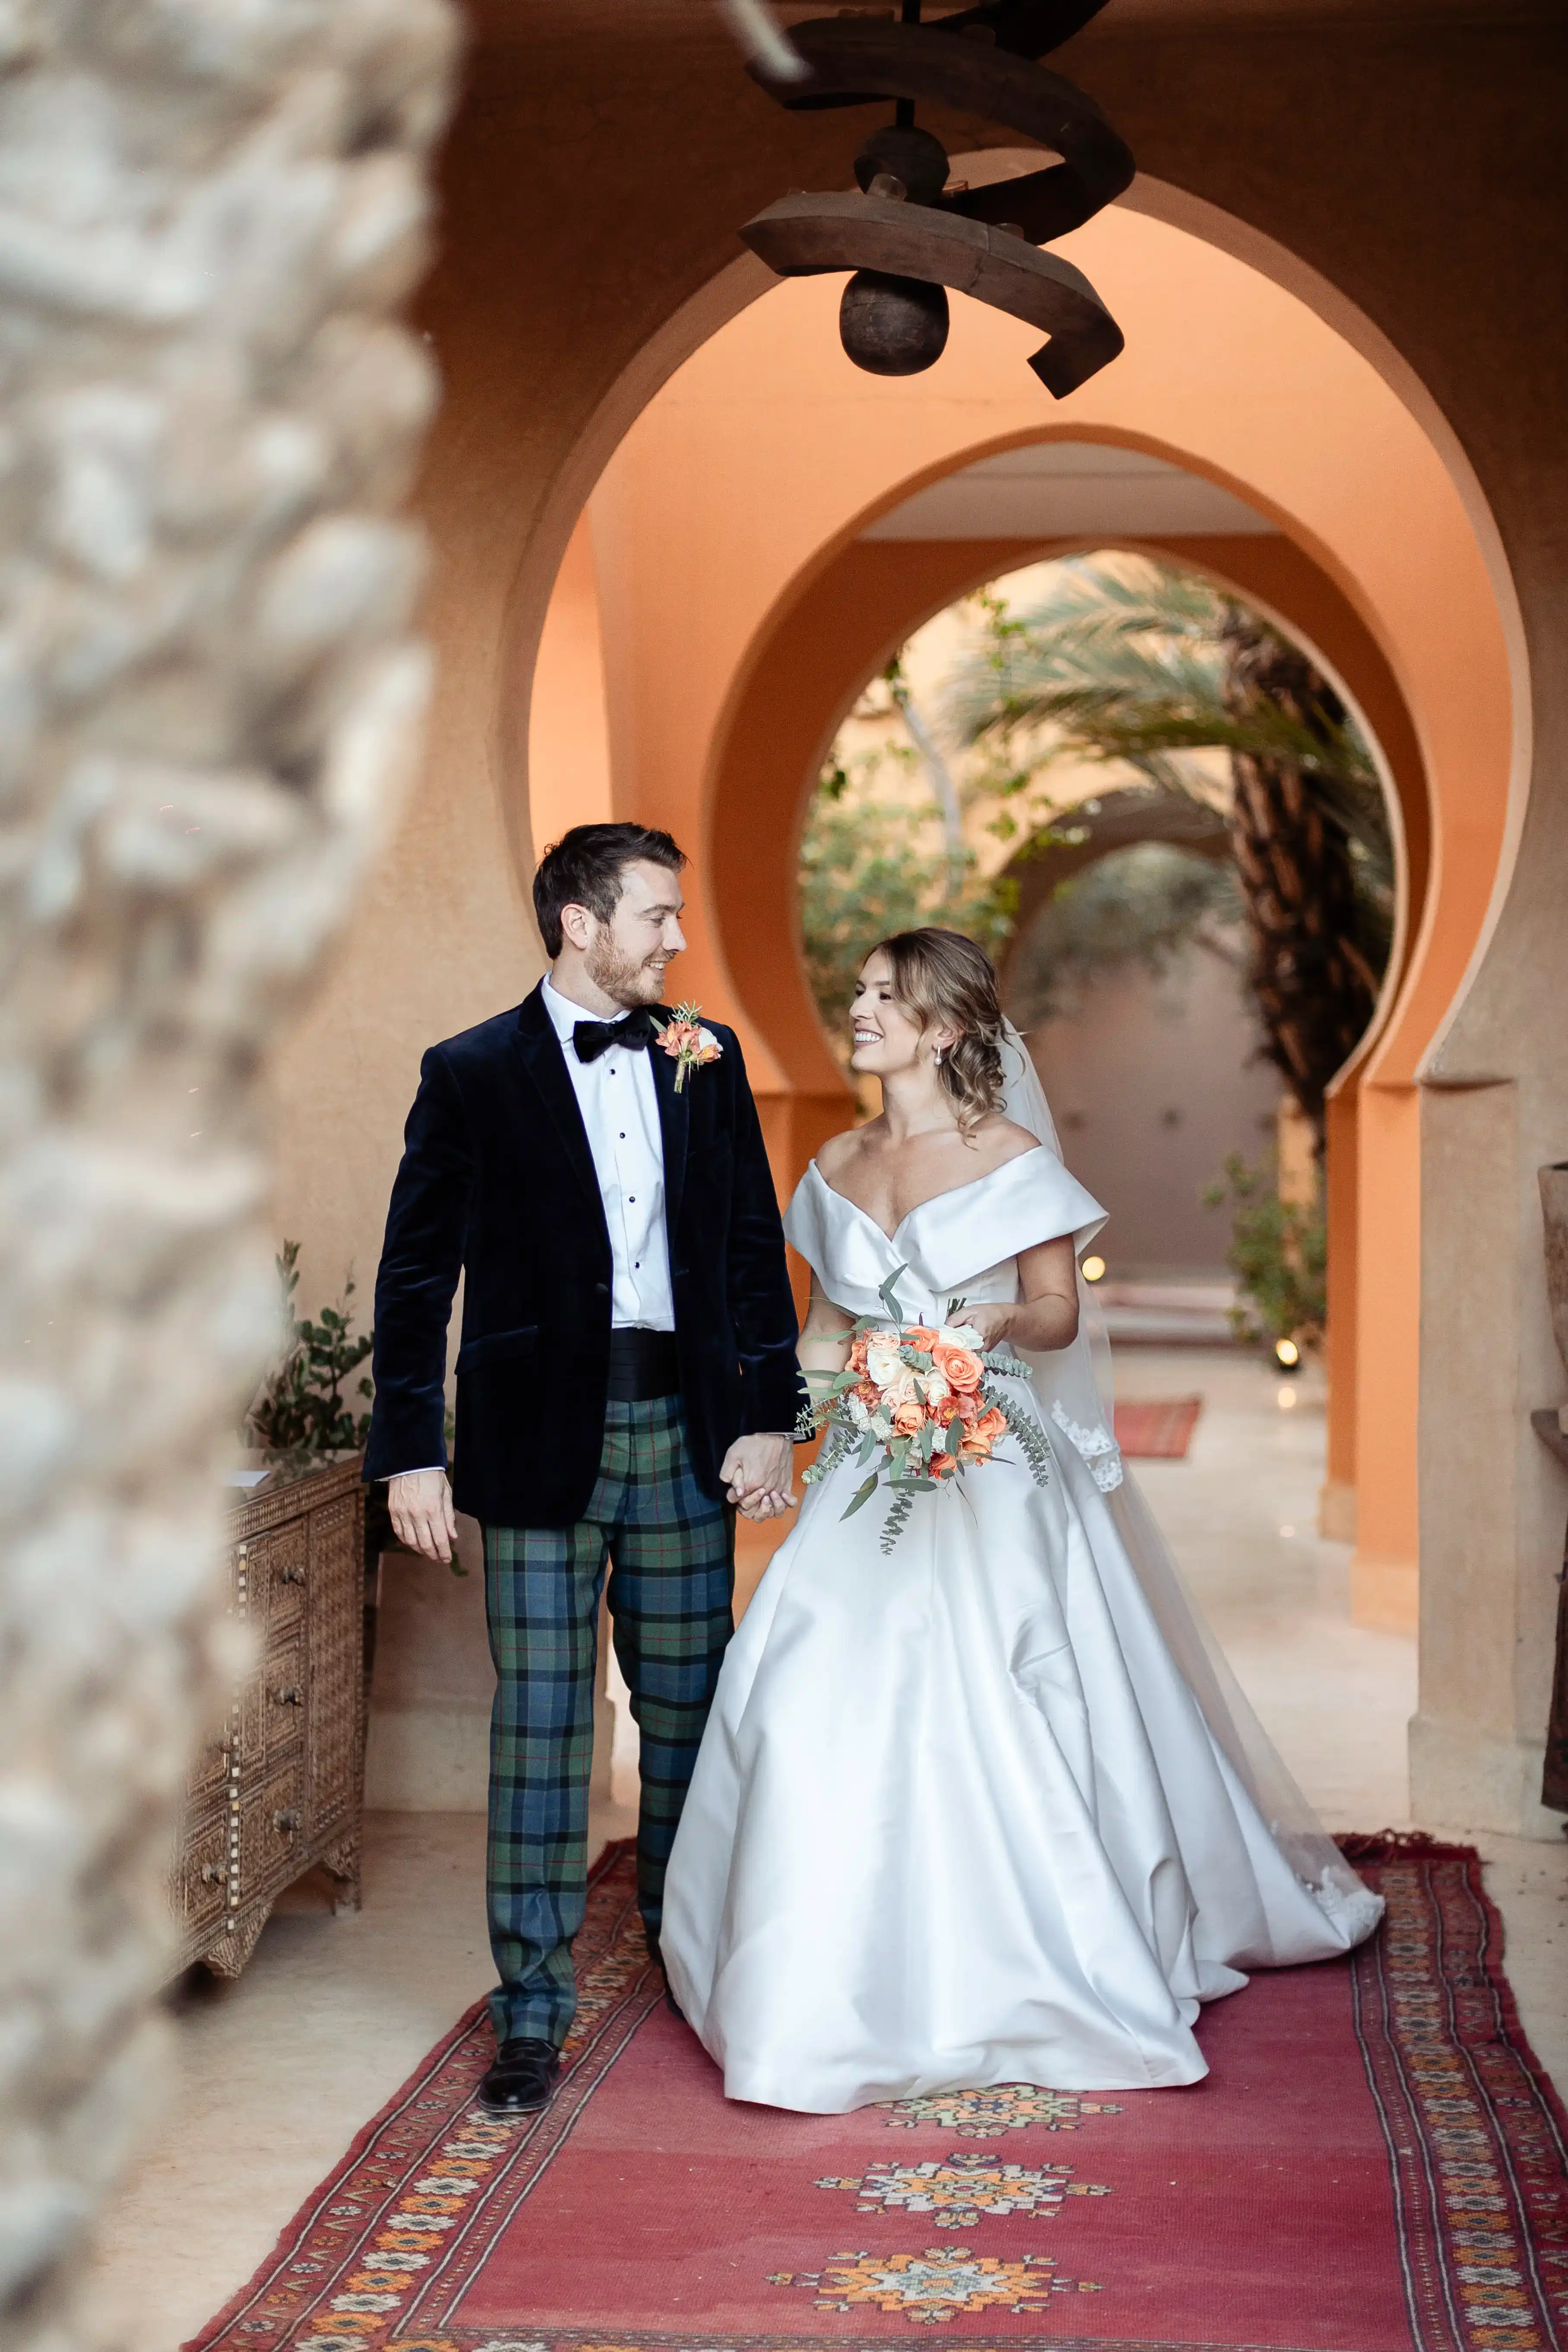 Irish Elegance in the Moroccan Oasis: A Marrakech Wedding